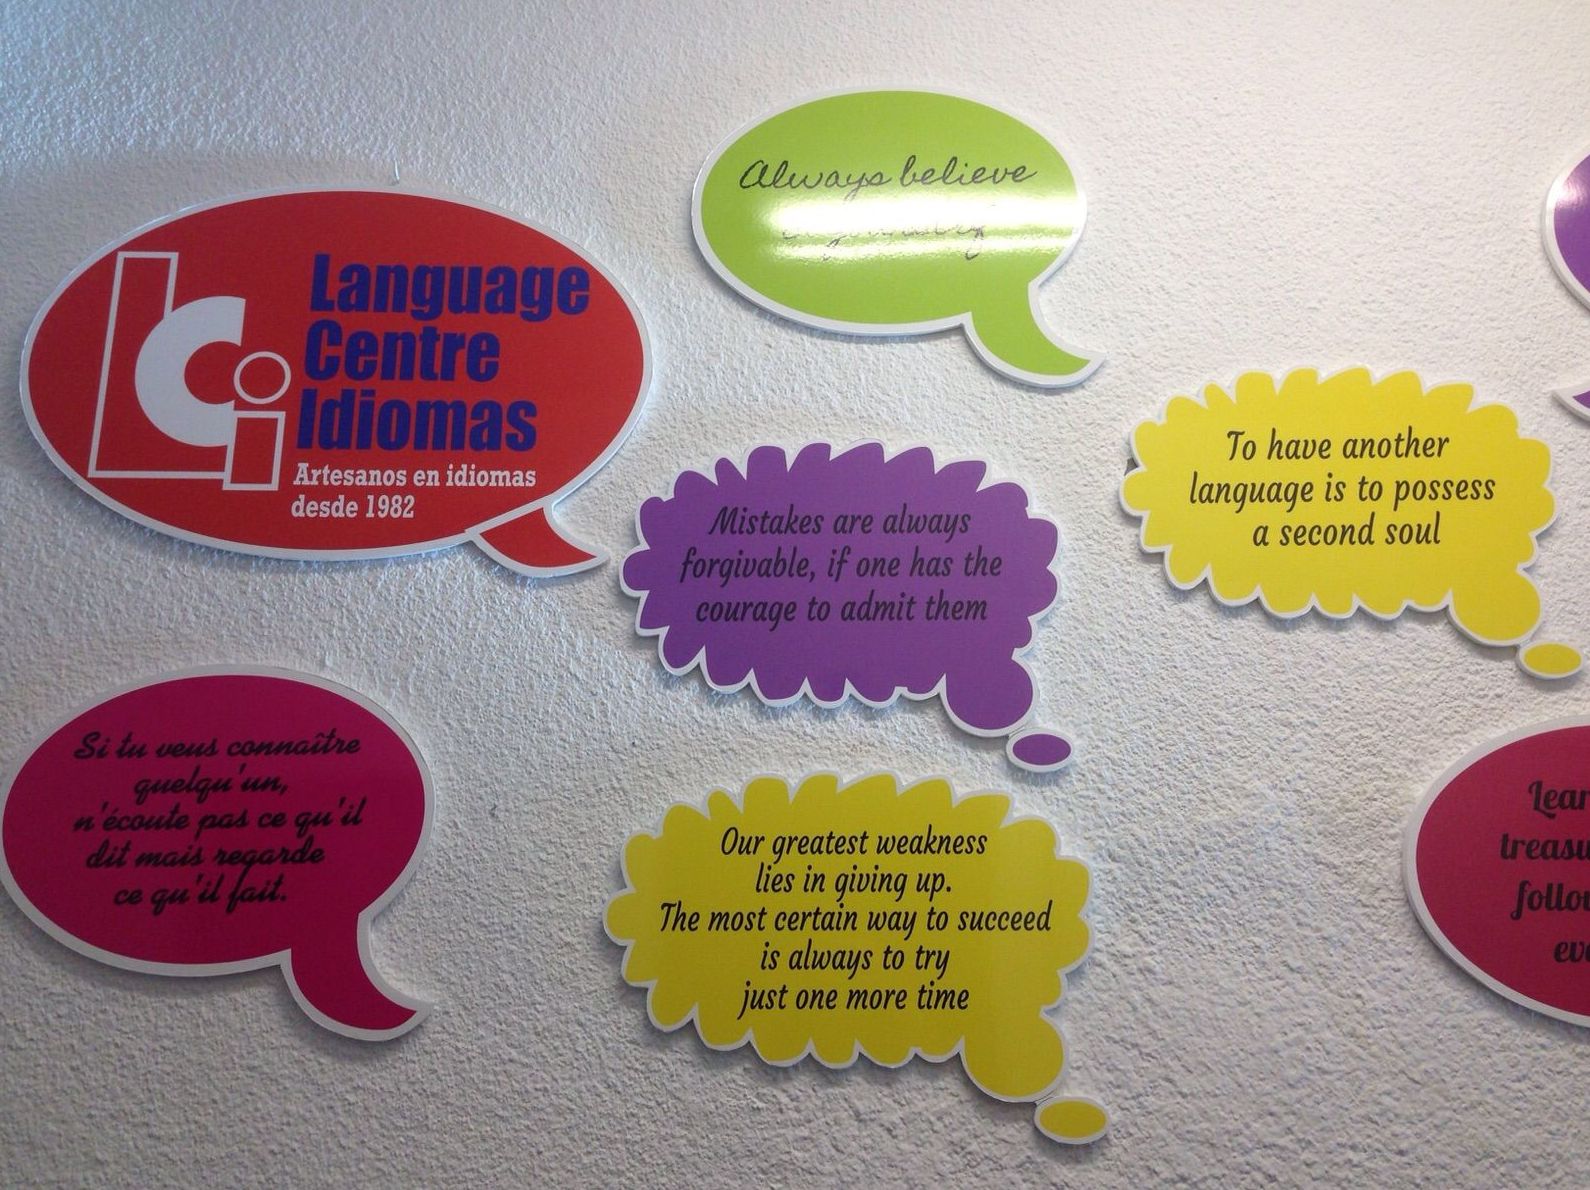 Academias de idiomas Aláquas. Language Centre Idiomas. Aprende idiomas